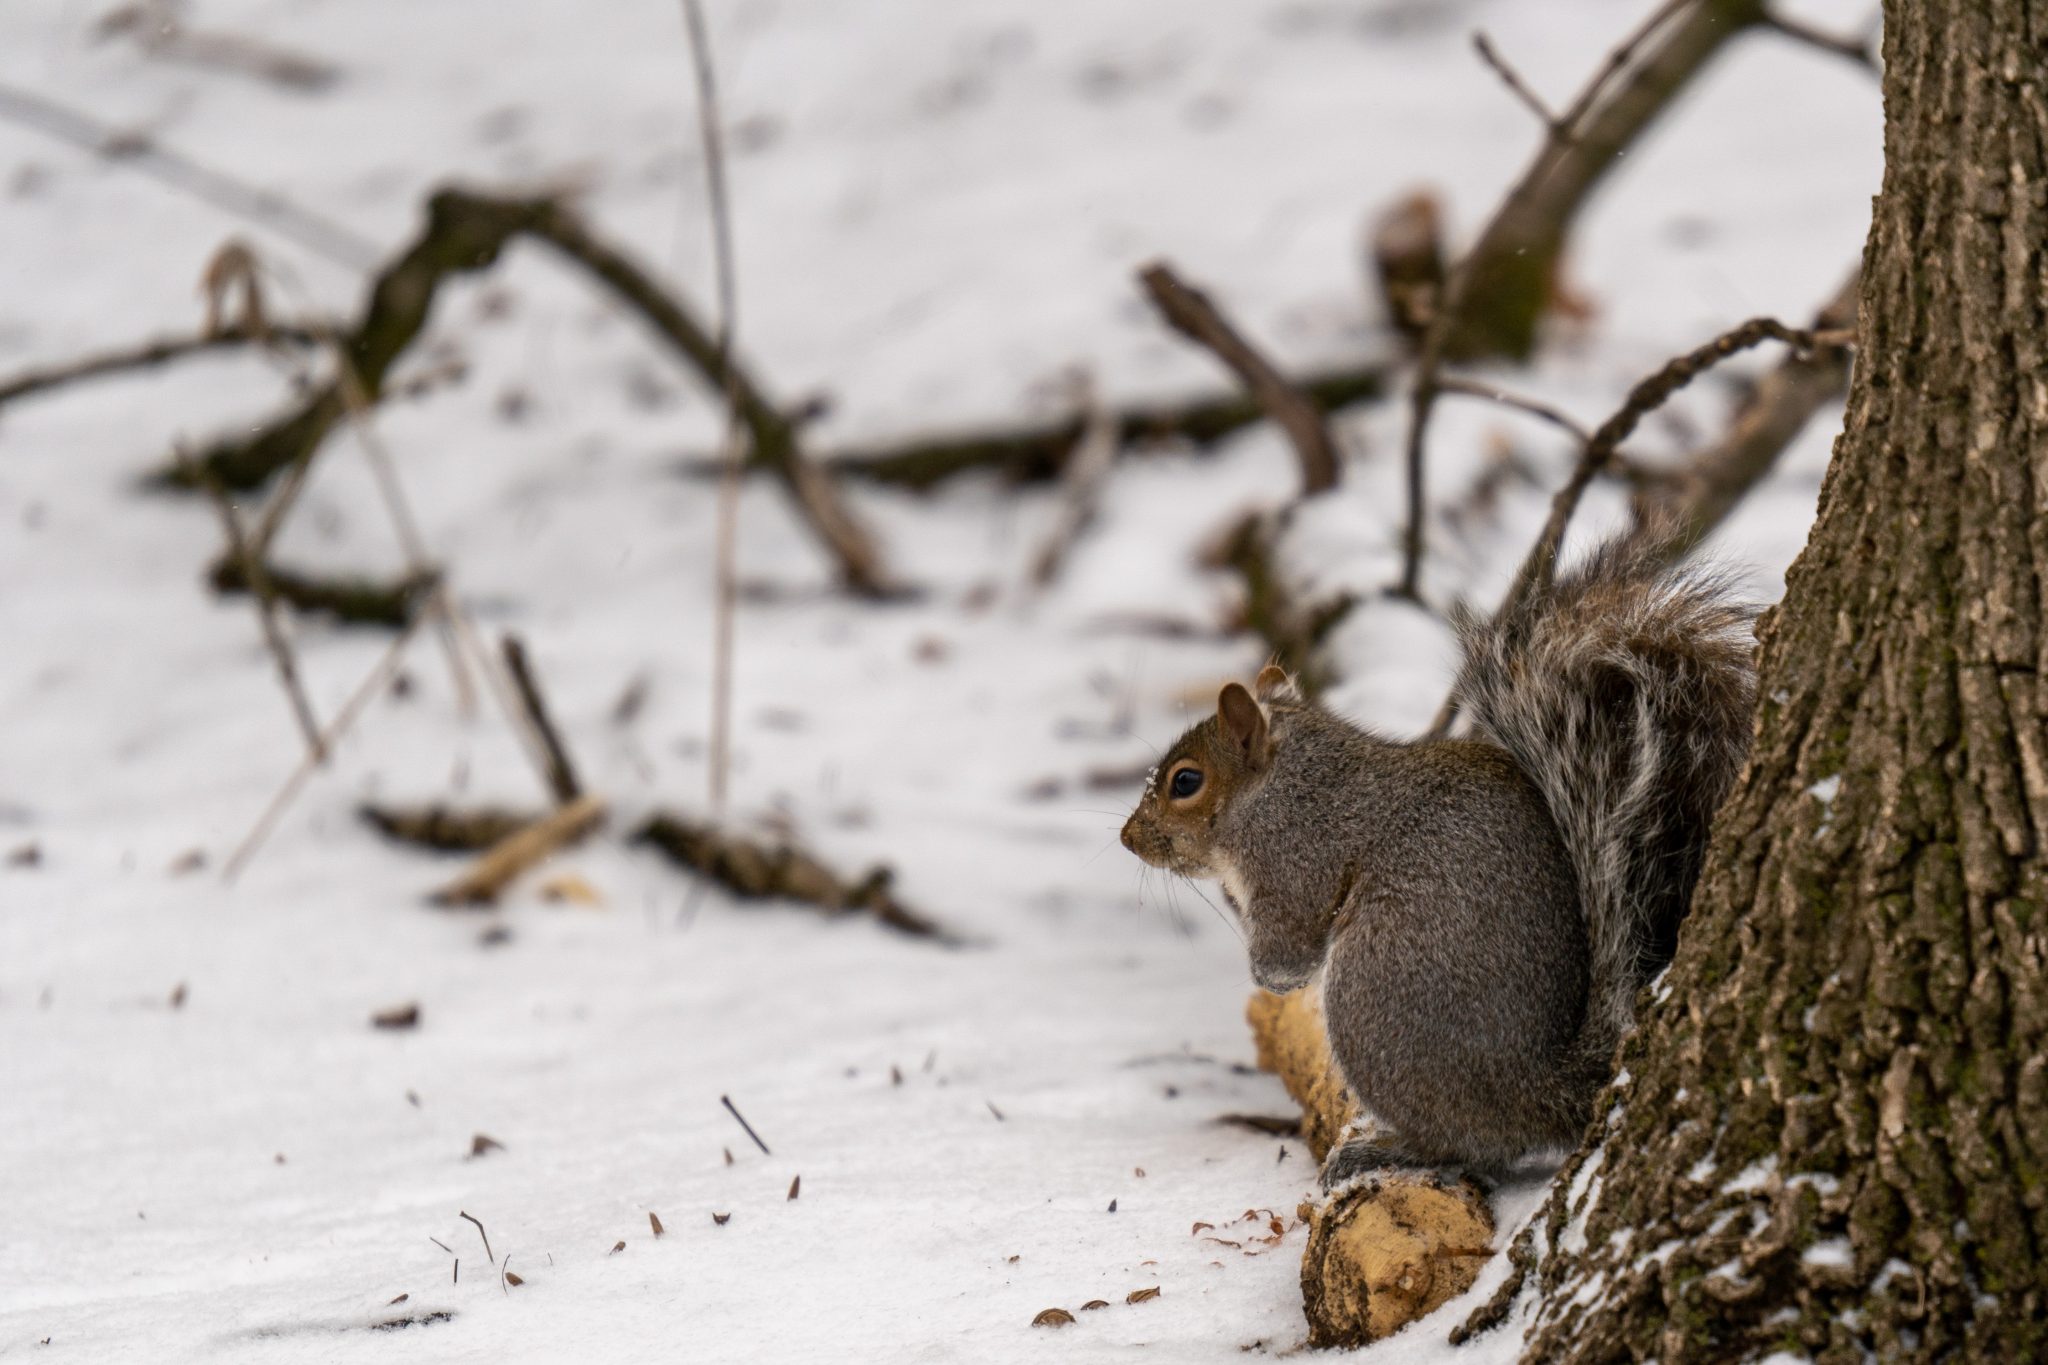 Fox squirrel sitting on a fallen branch